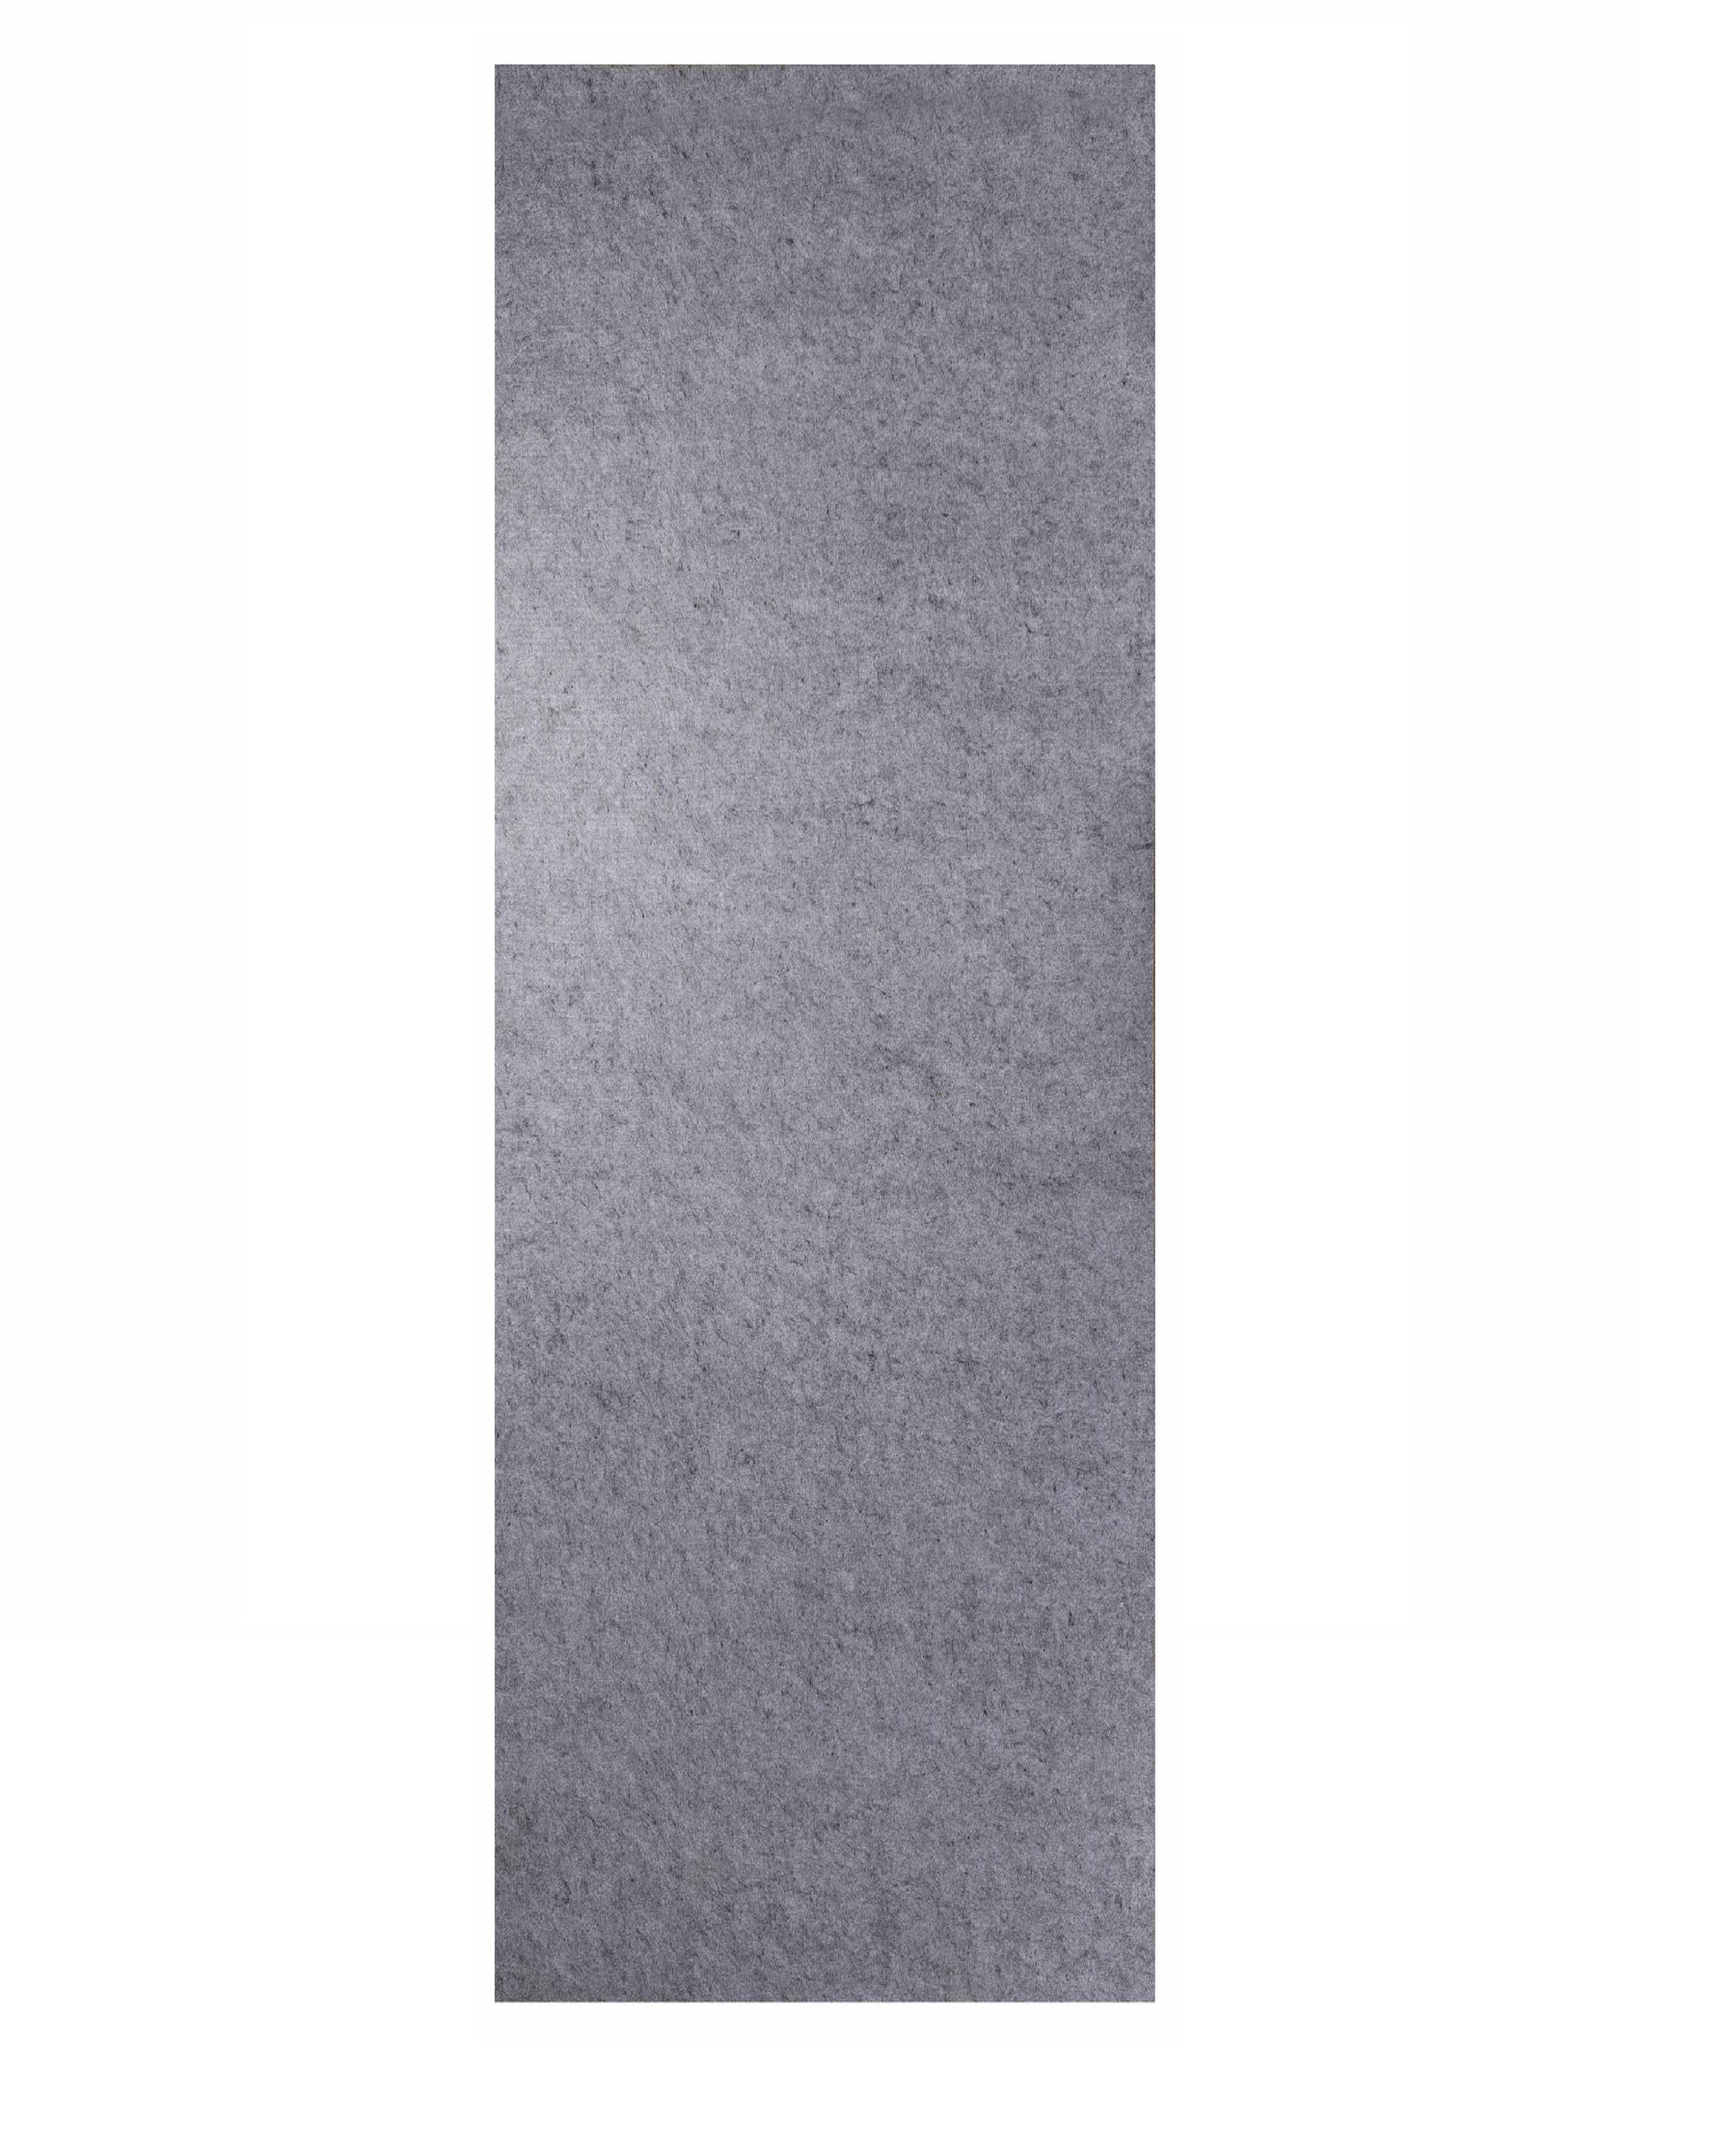 5 x 7 feet Non Slip Grip Rug Pad Low Profile Felt Cushion Floor Protection  Gray